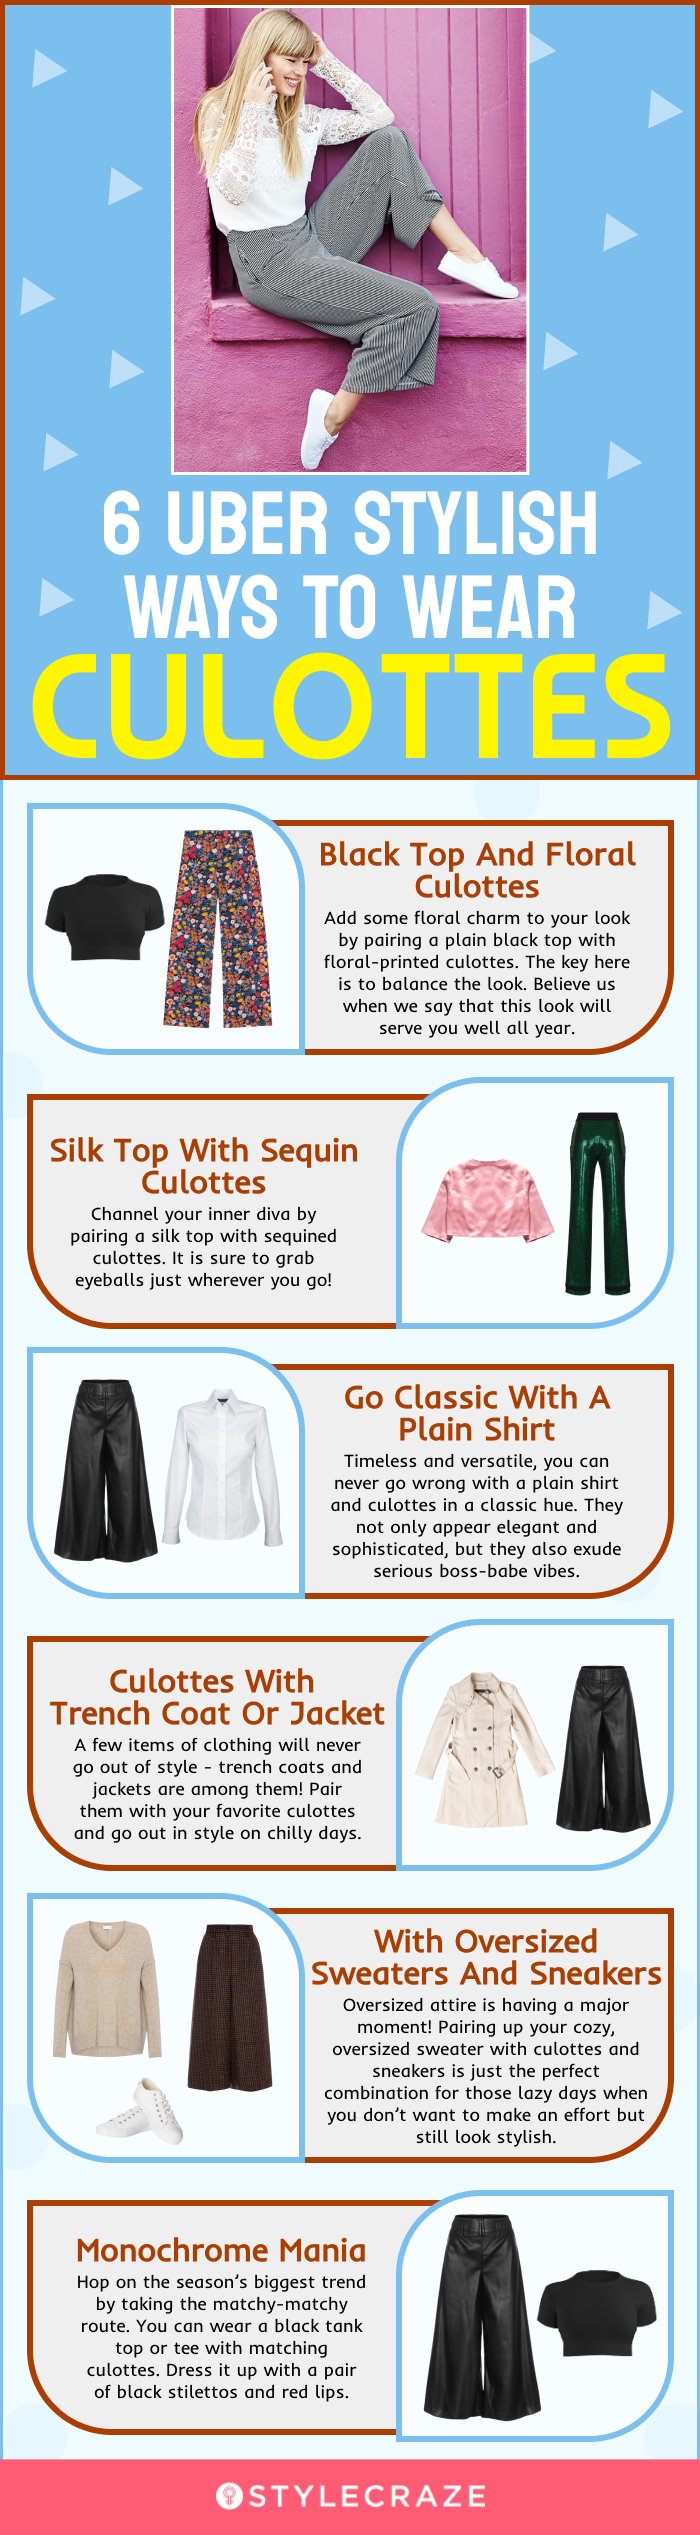 7 uber stylish ways to wear culottes(infographic)